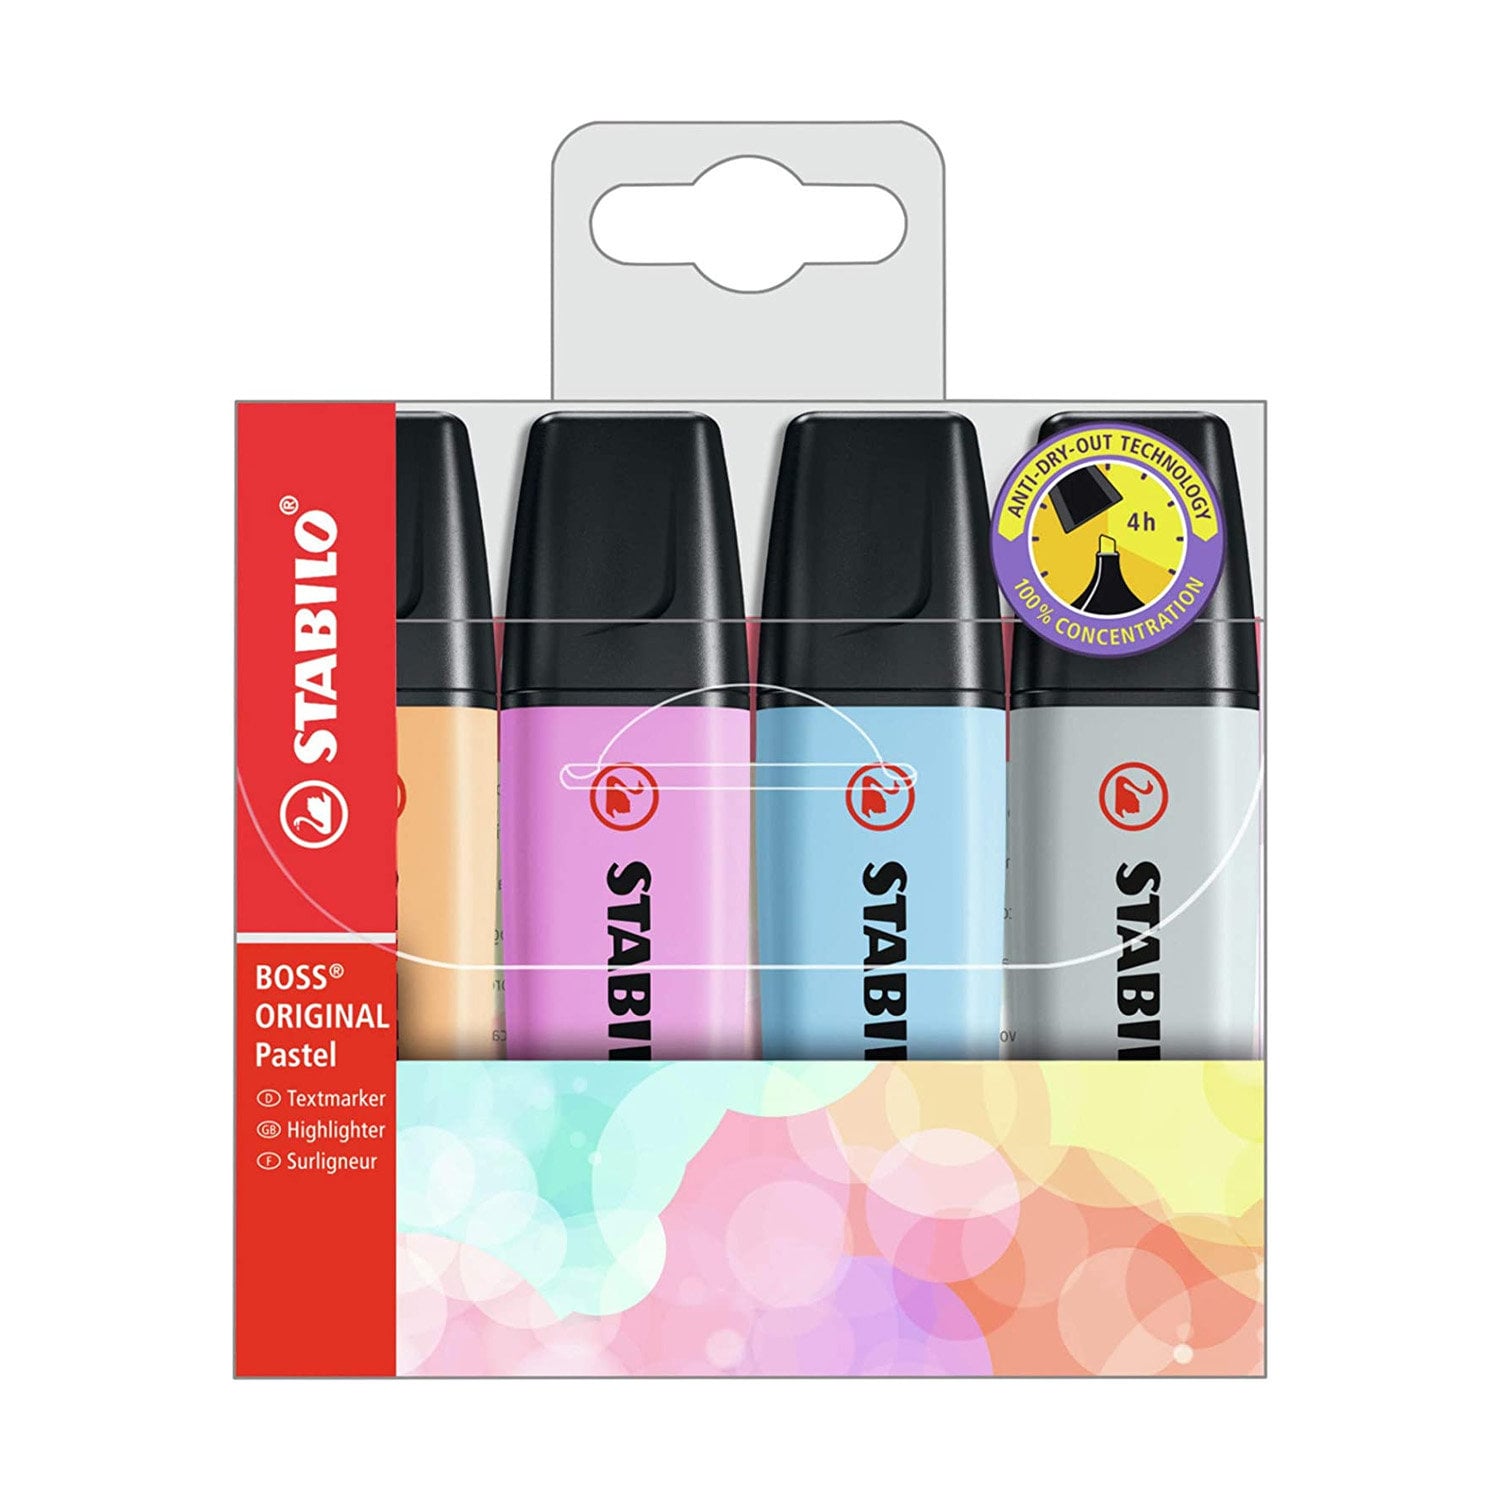 STABILO BOSS Original Highlighter Pens Highlighter Markers - Bumper Pack of  7 - Neon